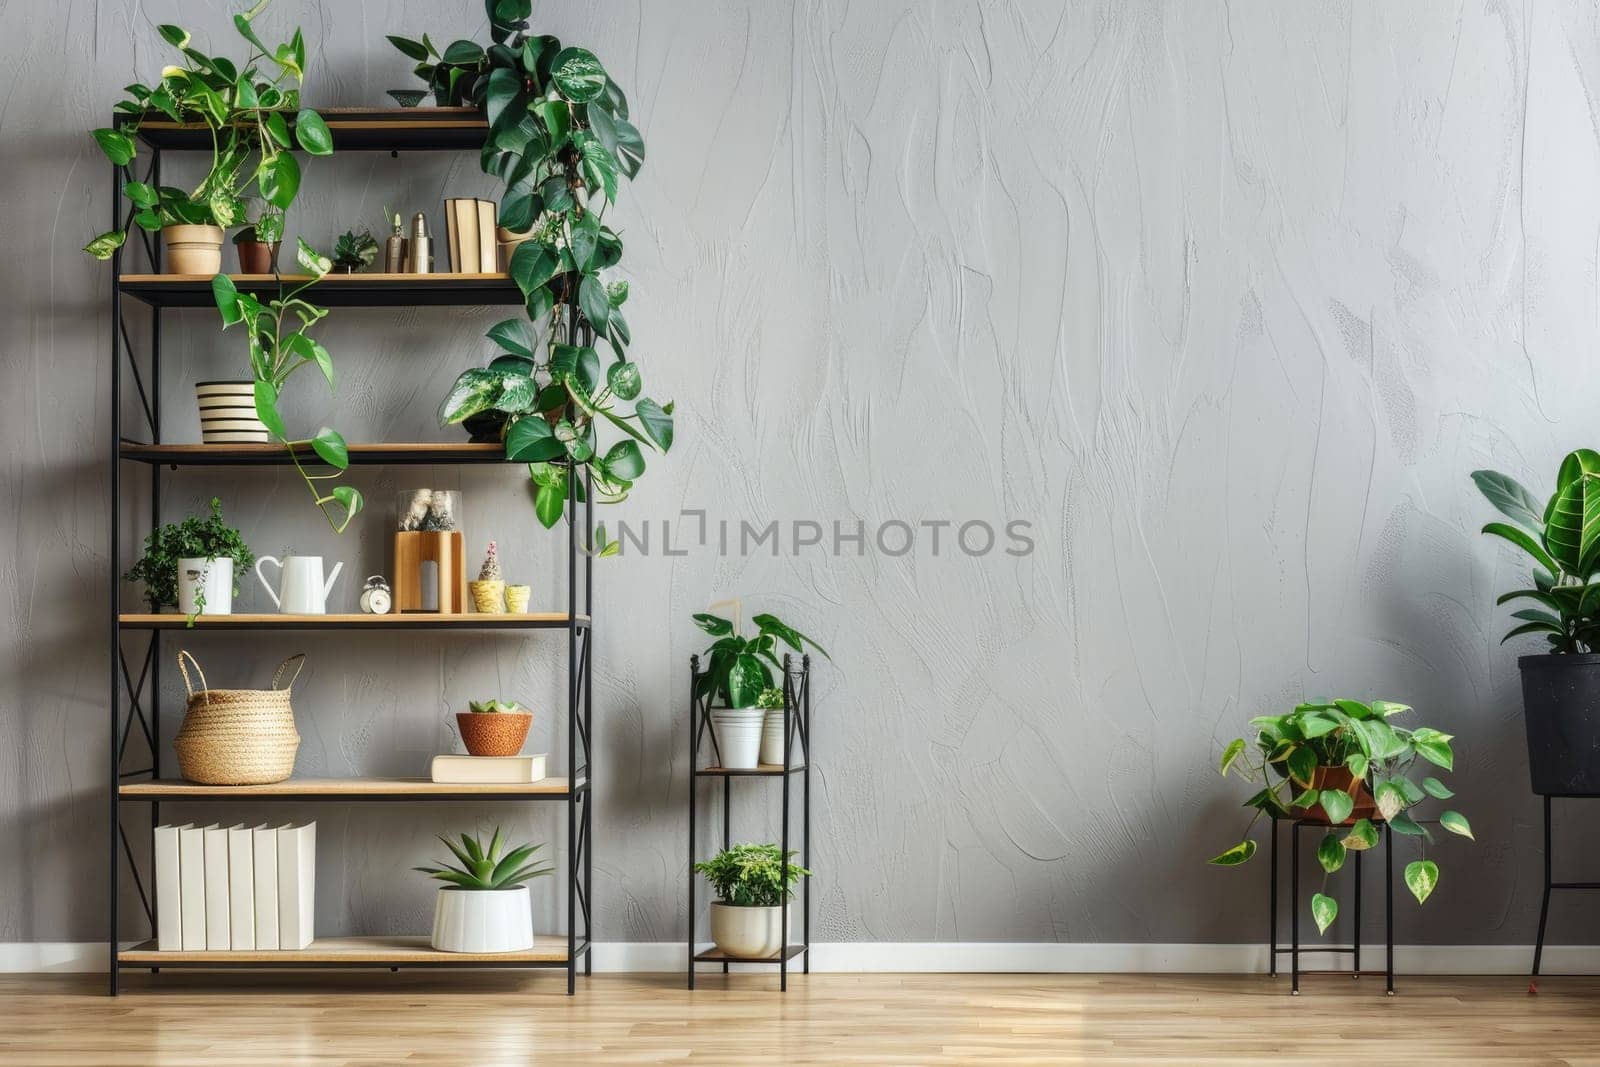 Minimalist workspace with a geometric bookshelf and potted plants